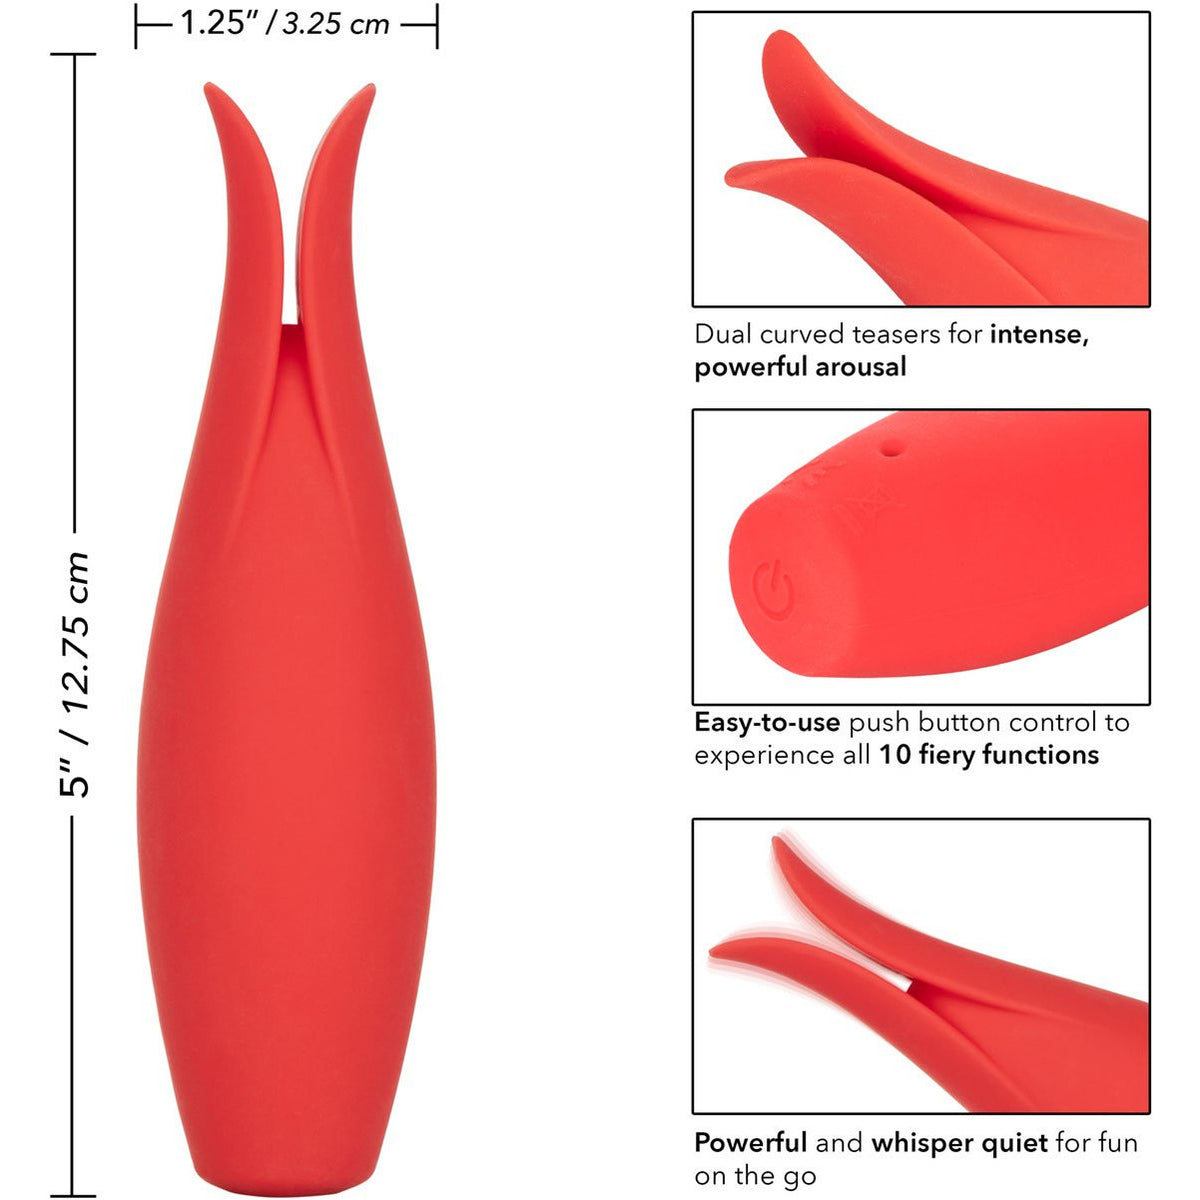 CalExotics Red Hot Fury – Clitoral Vibrator – Red